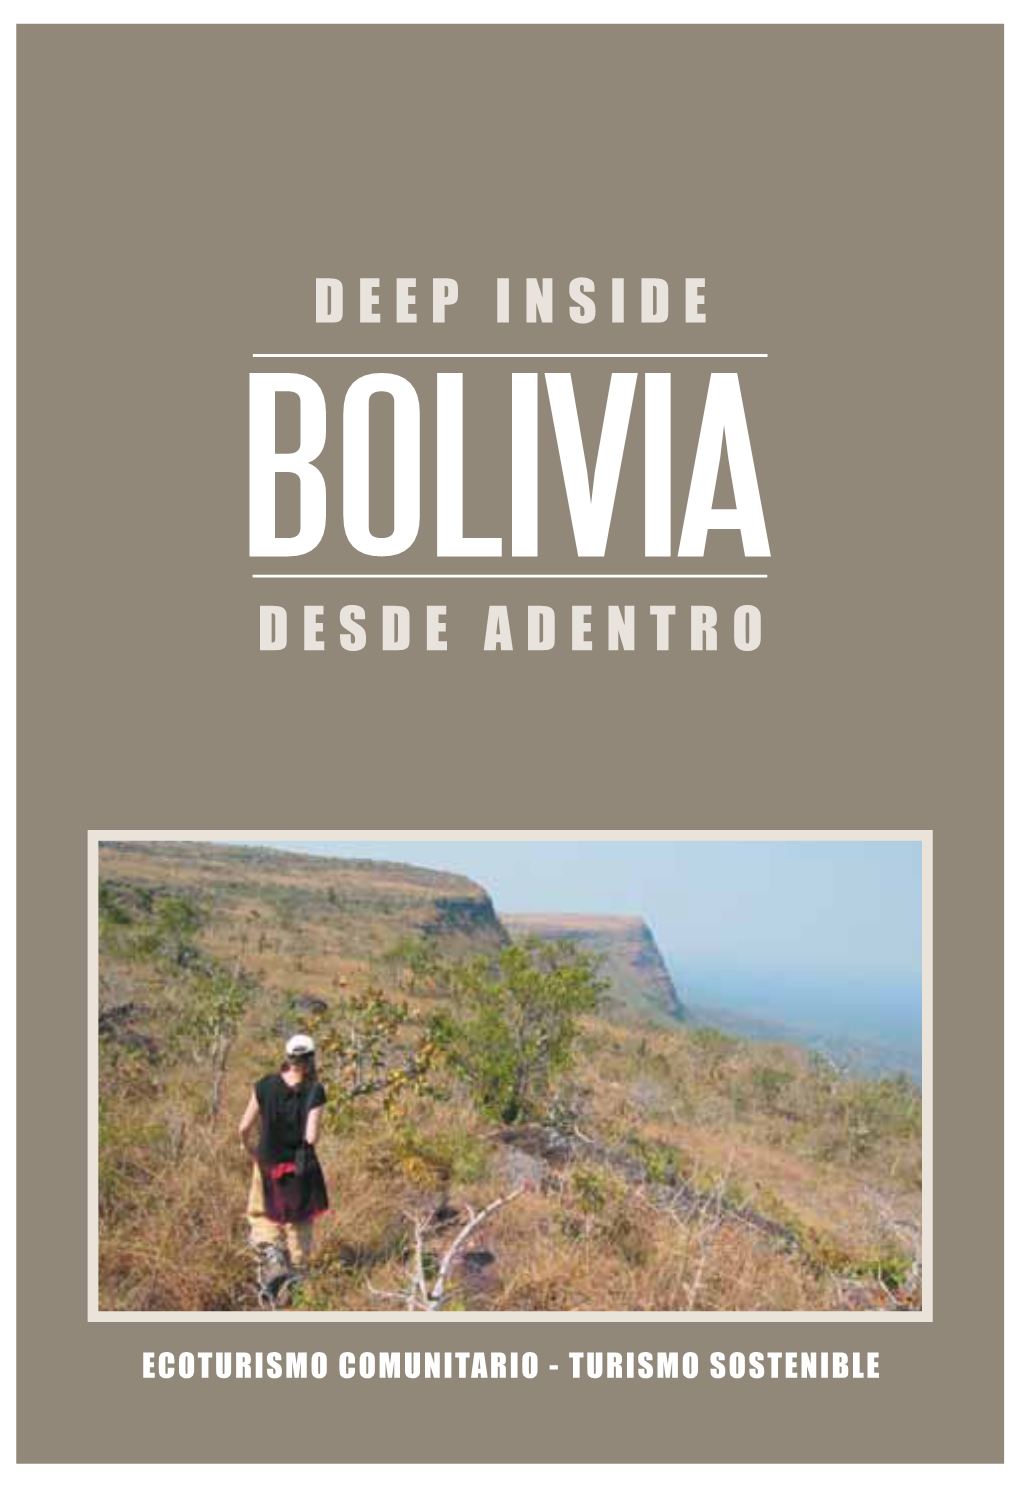 DESDE ADENTRO DEEP INSIDE BOLIVIA CONTENIDOS 07 • Introducción • Introduction